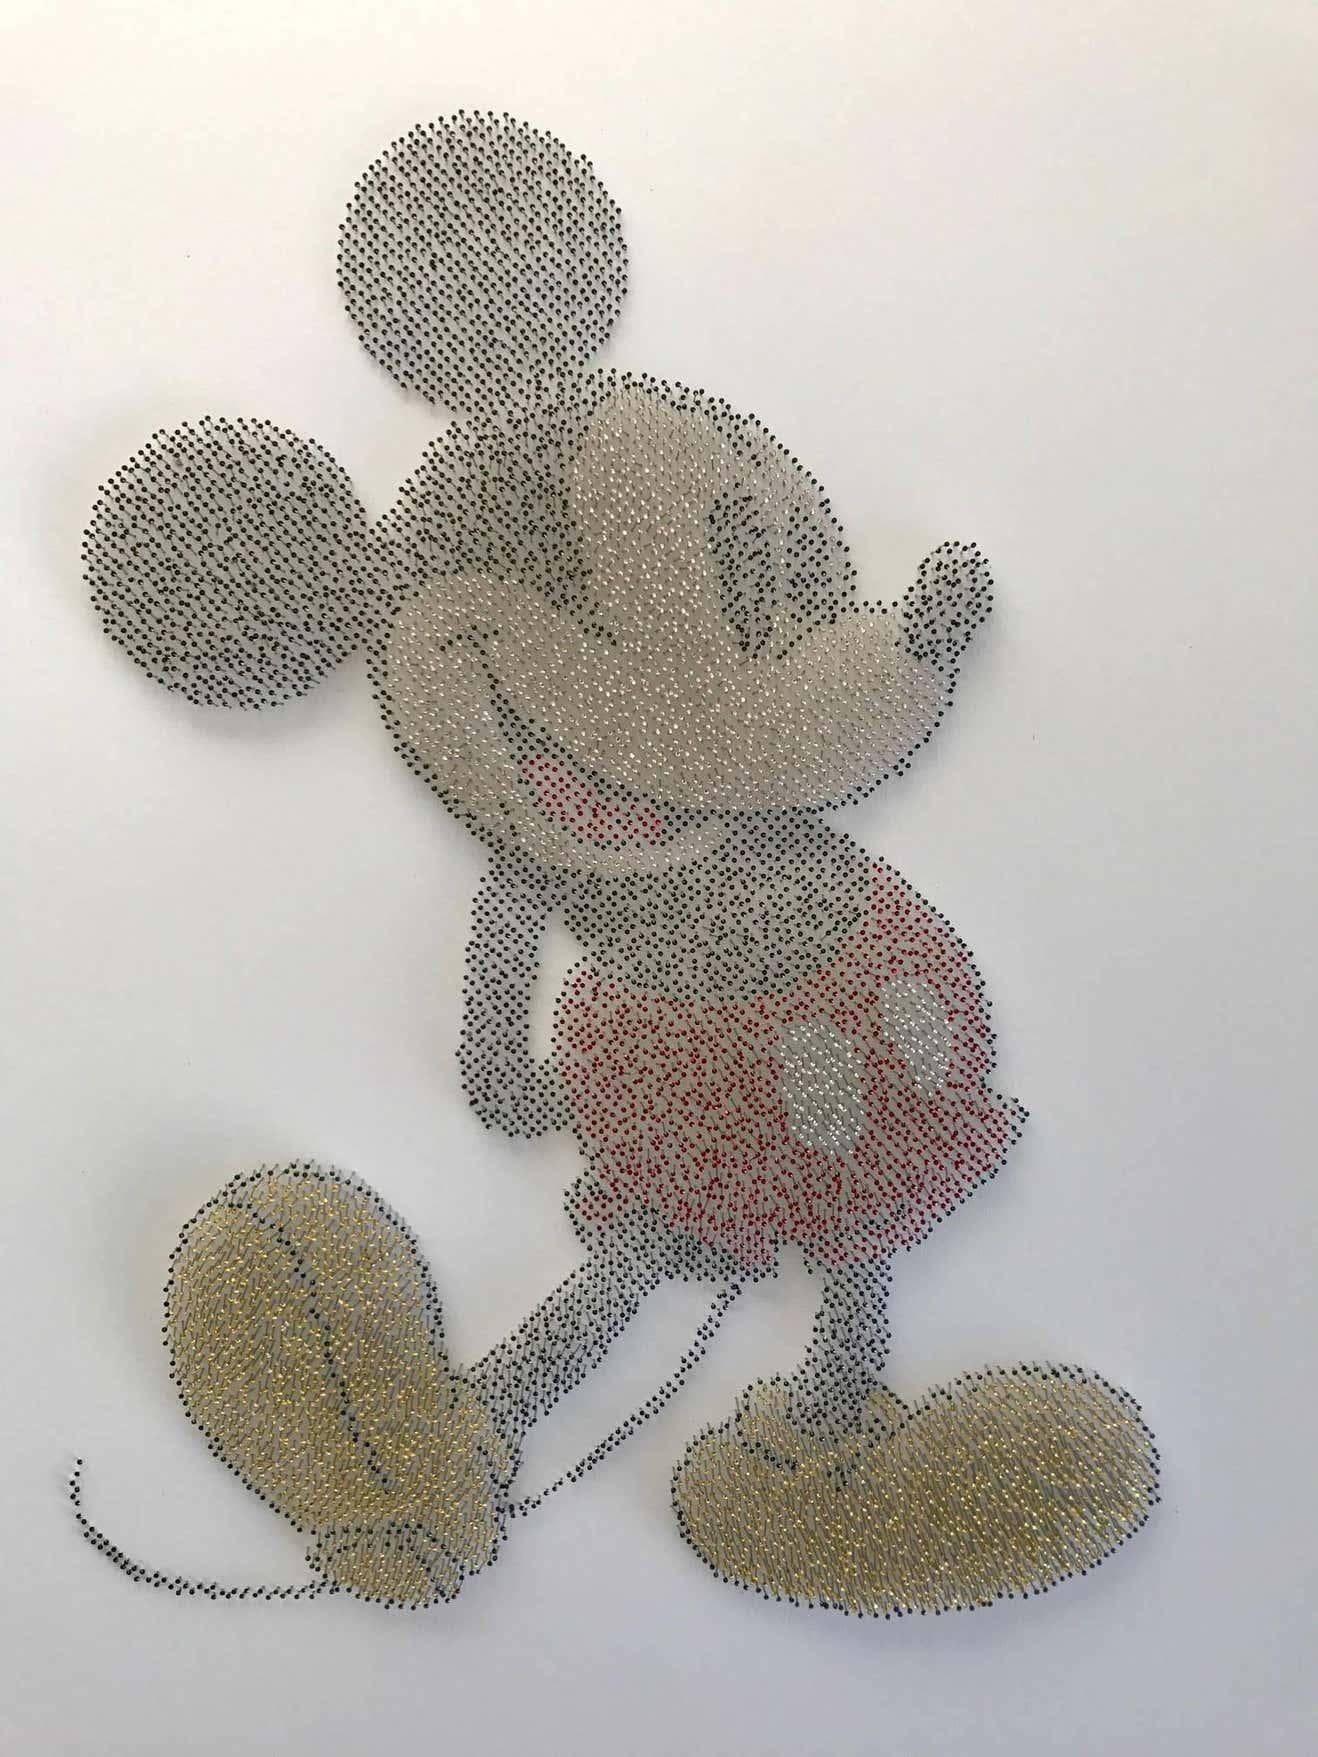 Stephen Graham Still-Life Sculpture - Mickey Mouse 